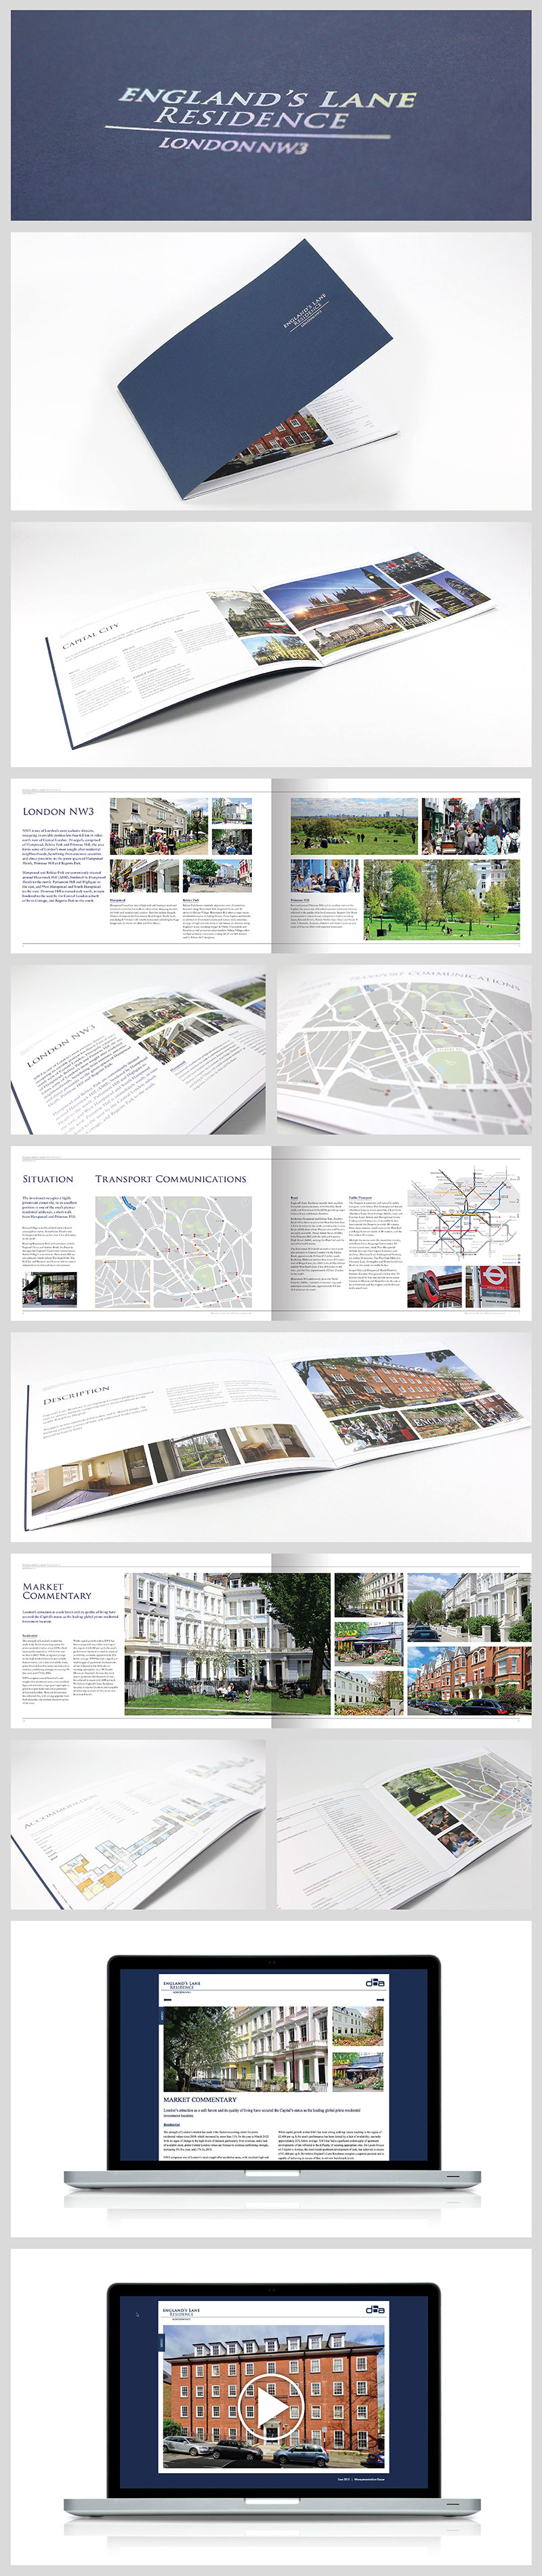 dba_englands-land_property-brochure-pinterest